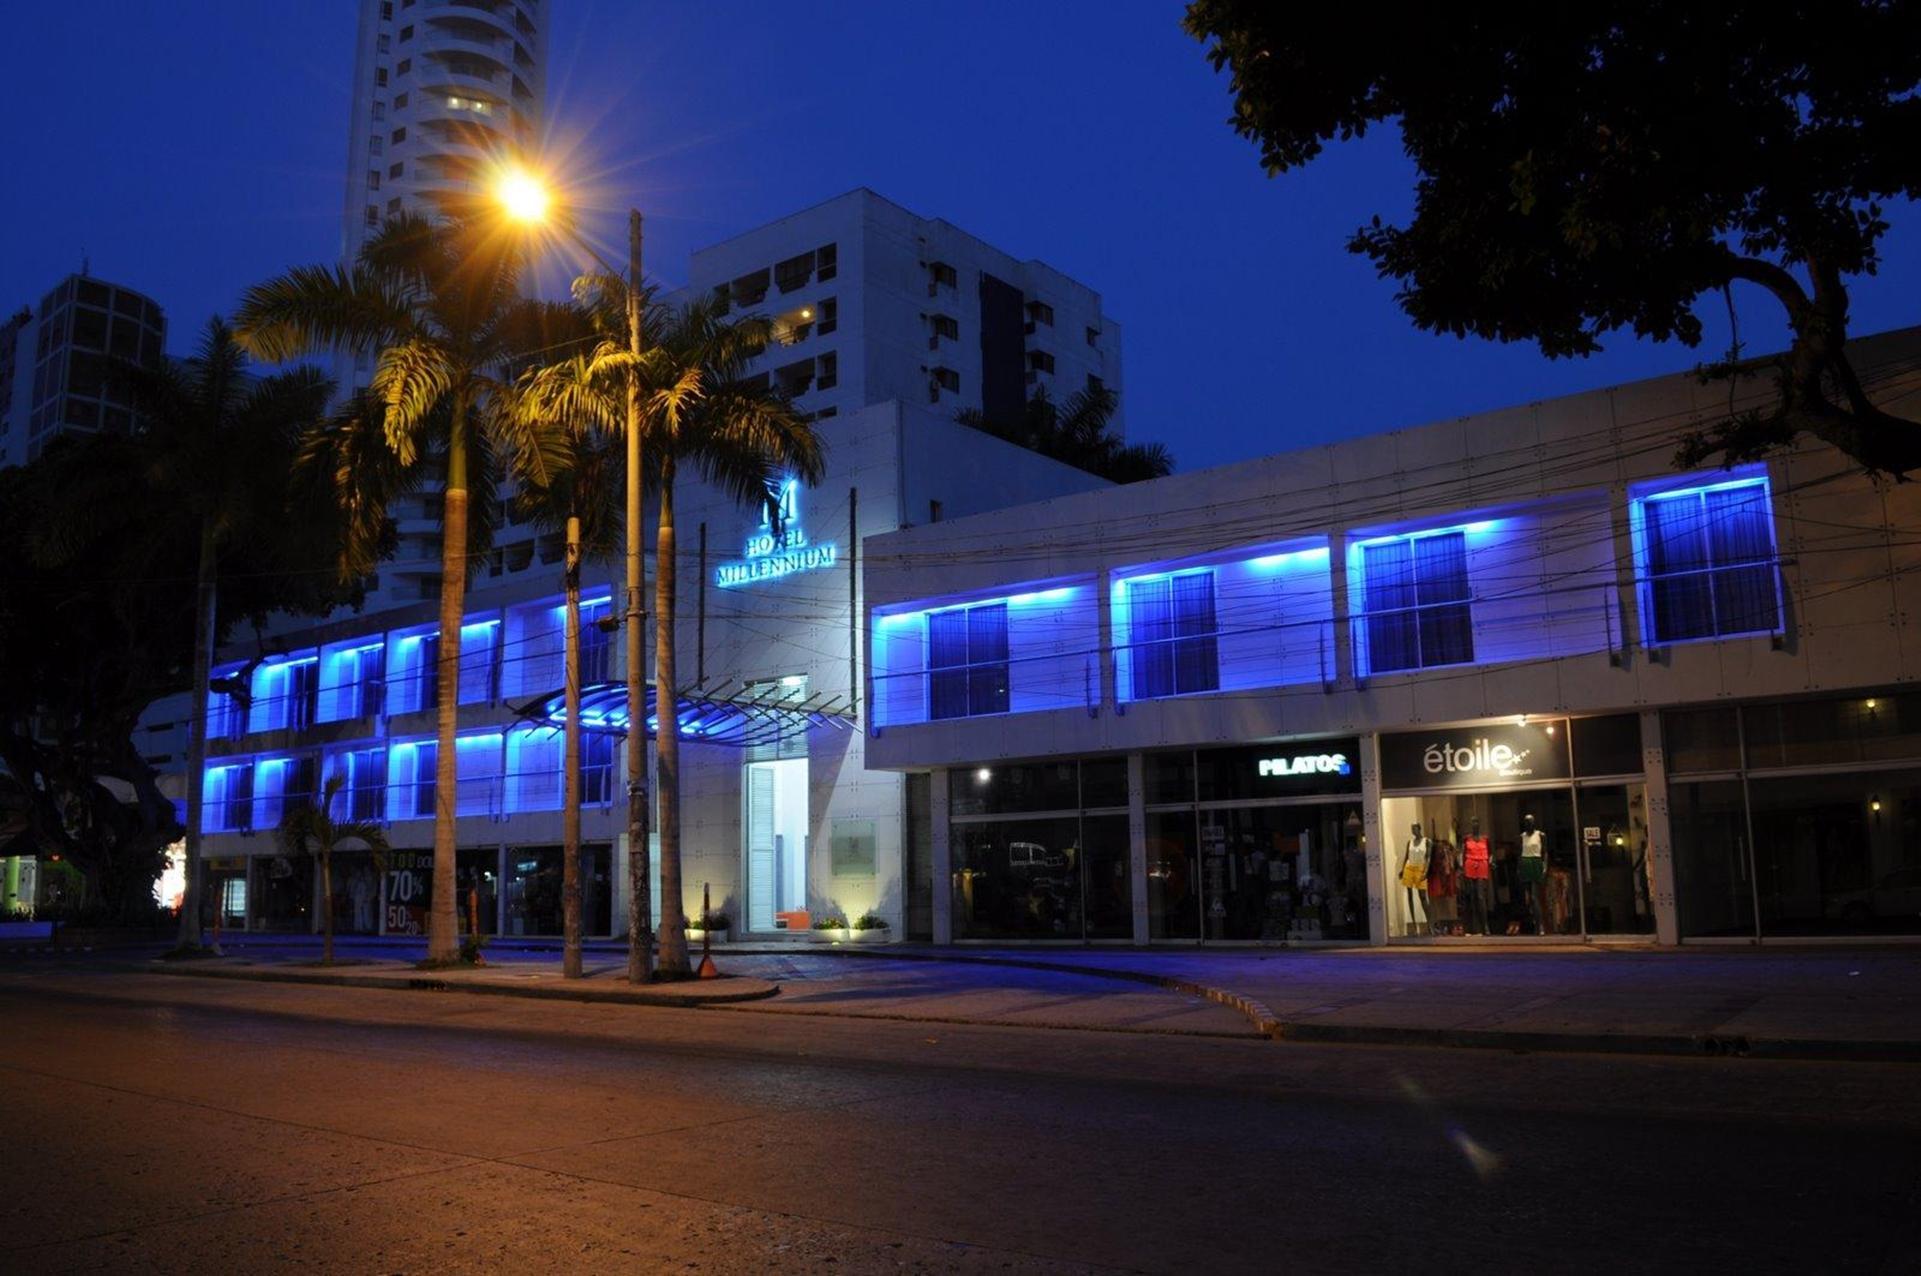 Madisson Boutique Hotel Cartagena Exteriér fotografie